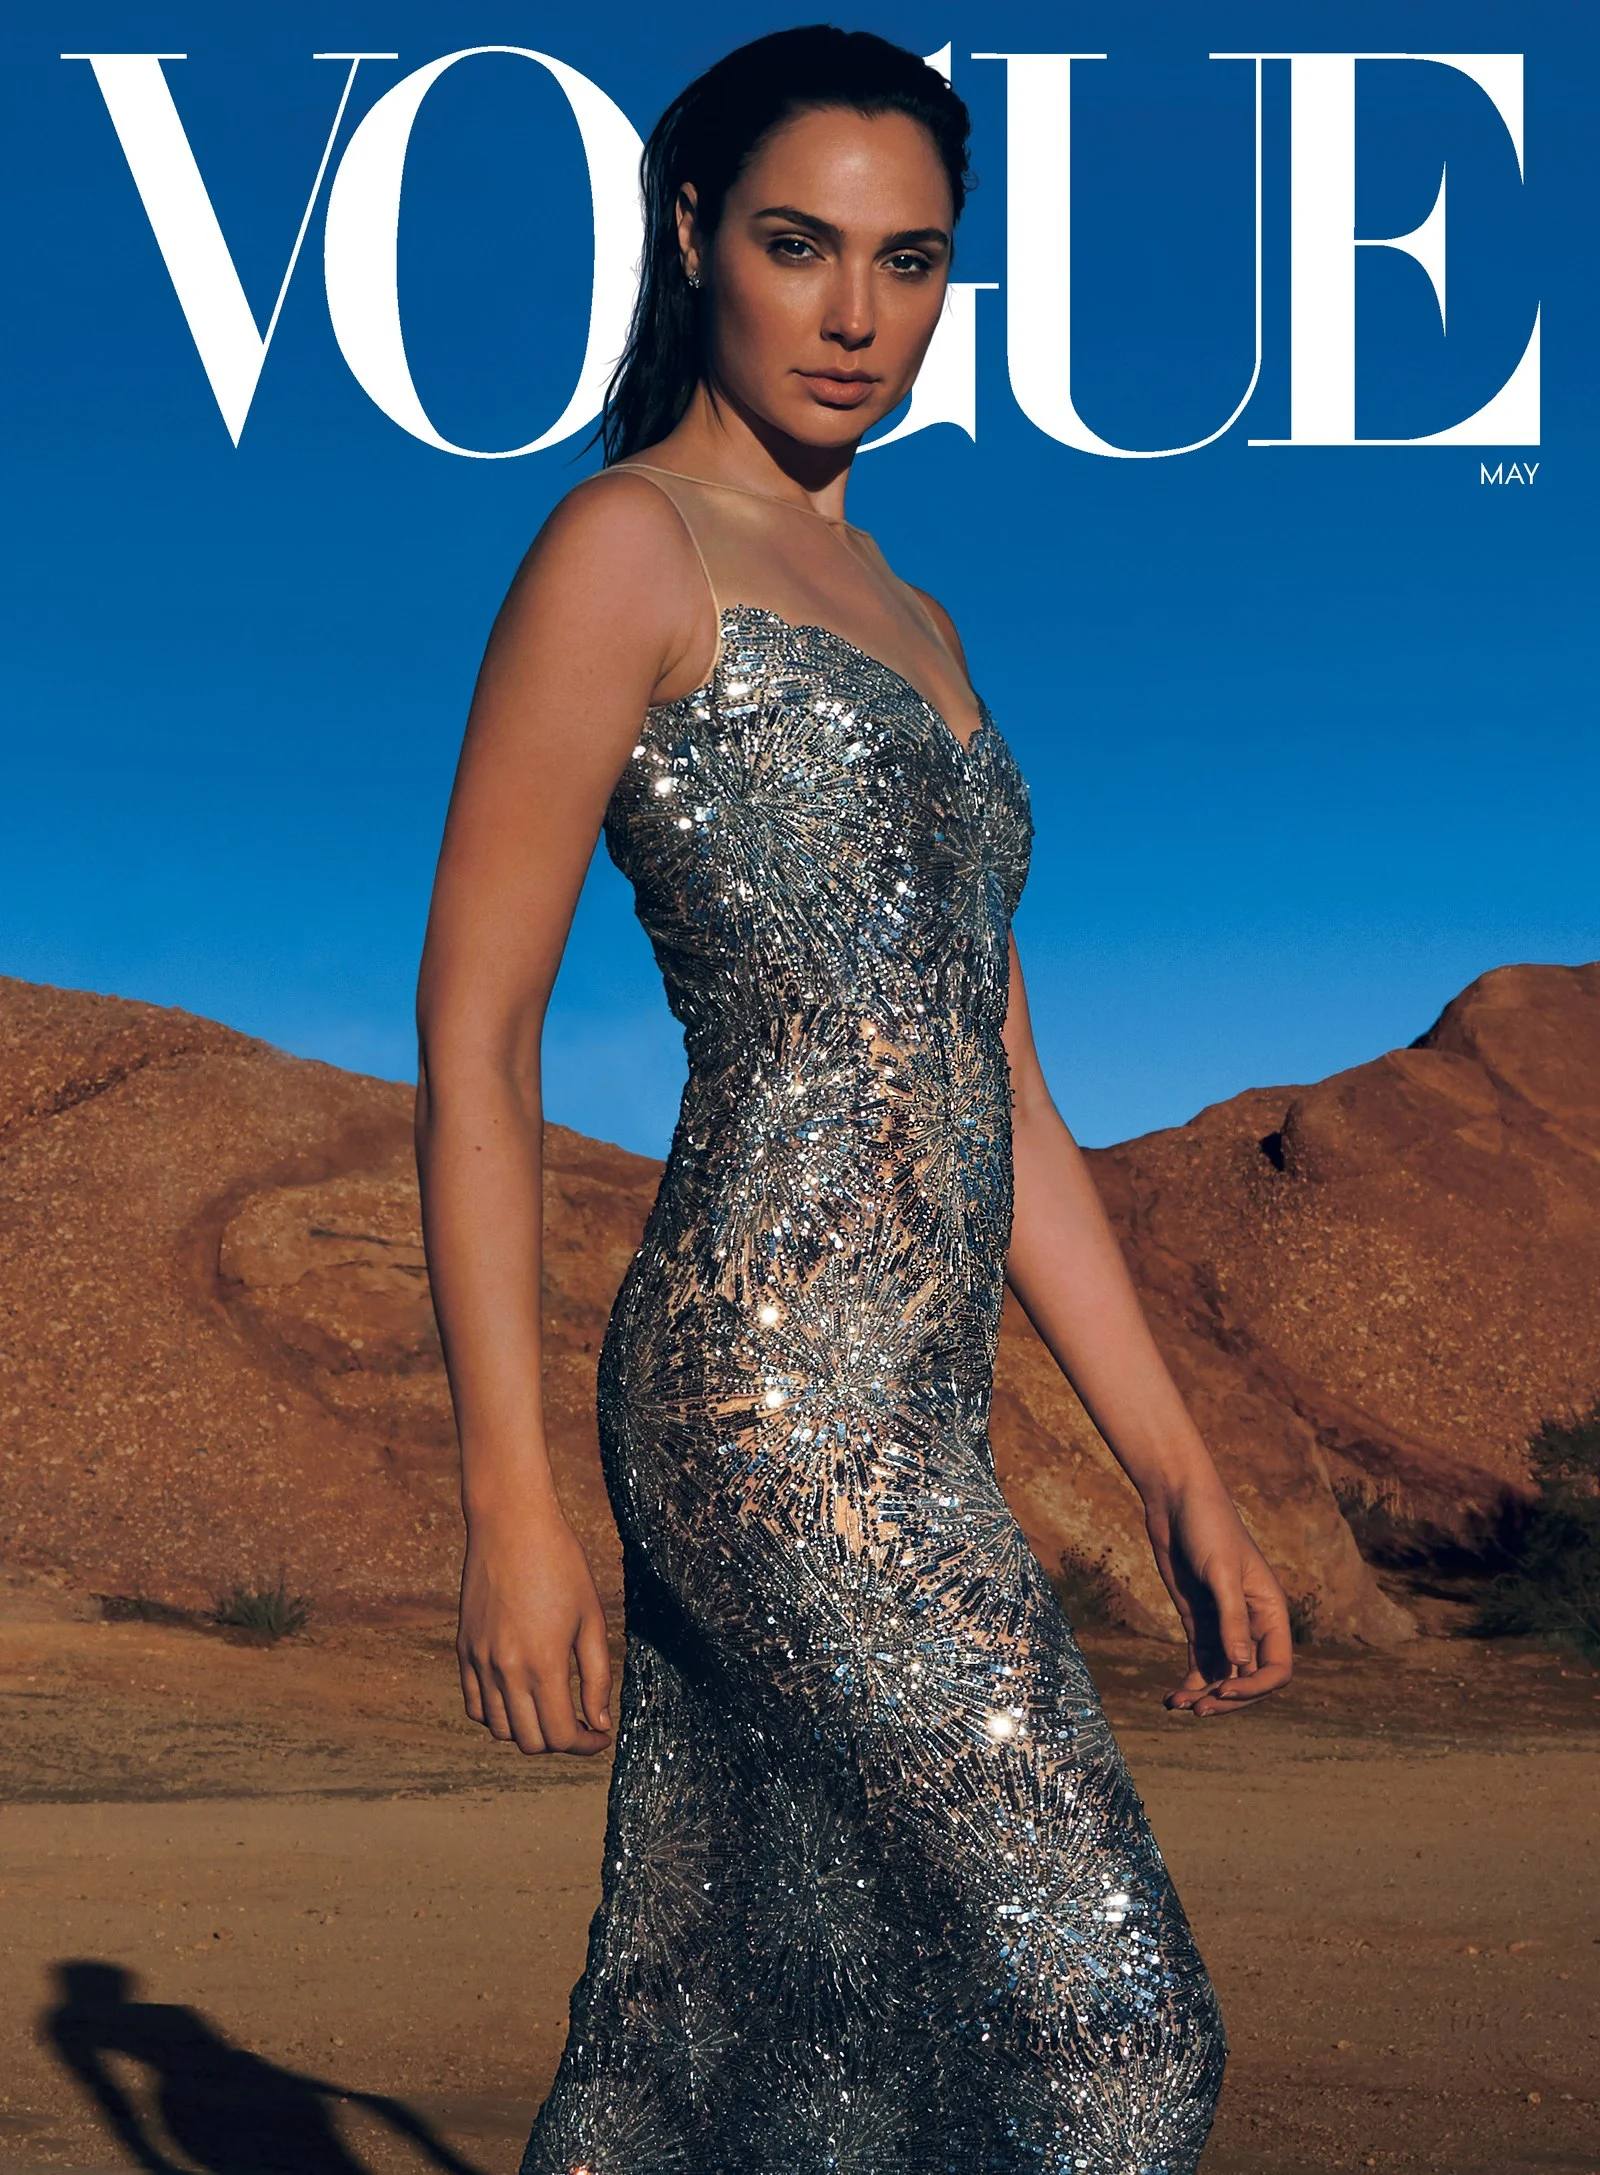 Gal Gadot - Vogue Cover - 2020 - Gal Gadot Photo (43303220) - Fanpop